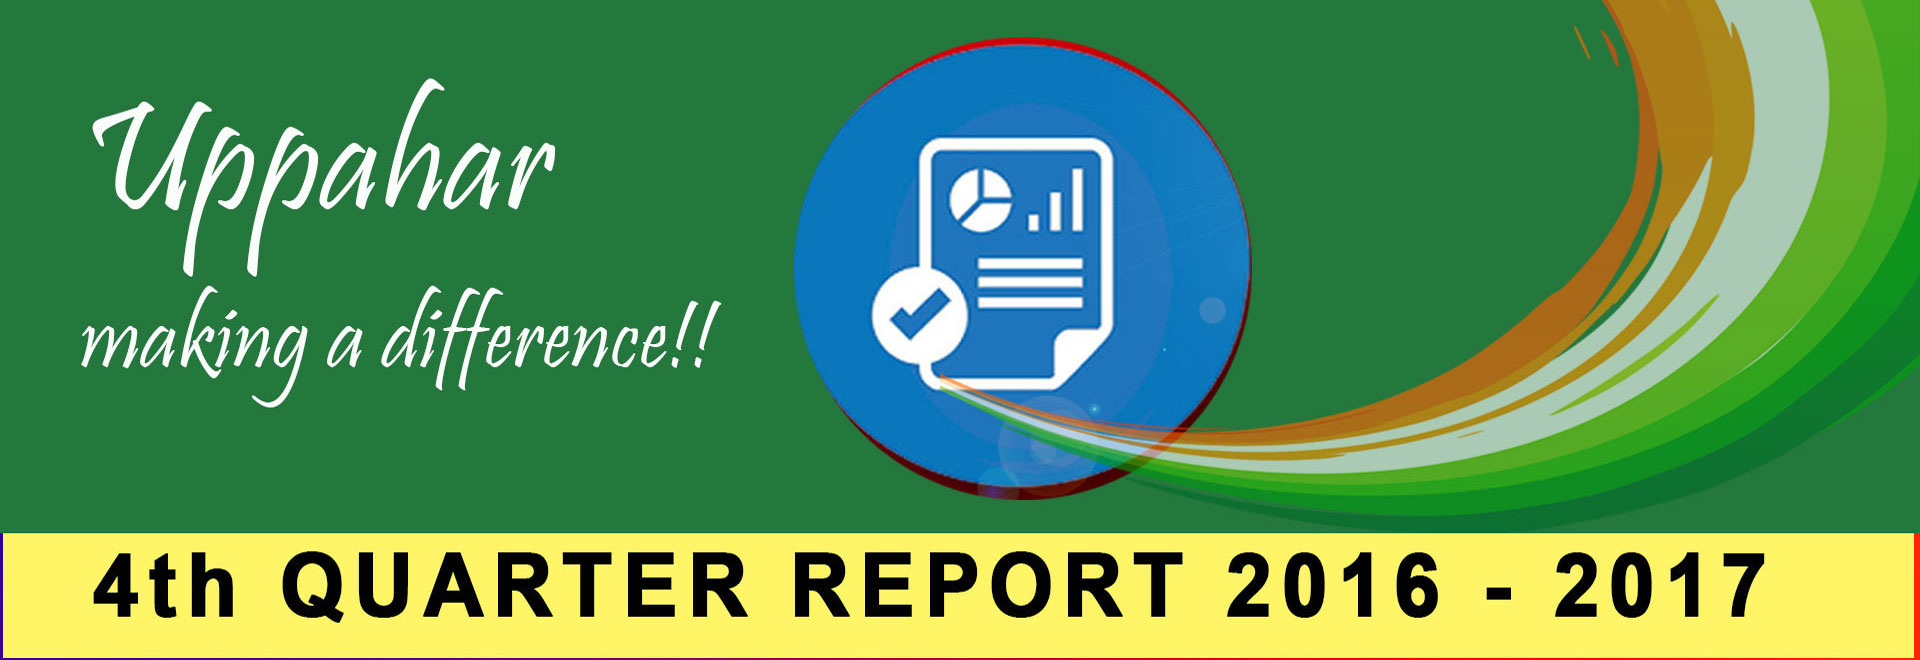 Uppahar India 3rd Quarterly Report 2016-2017